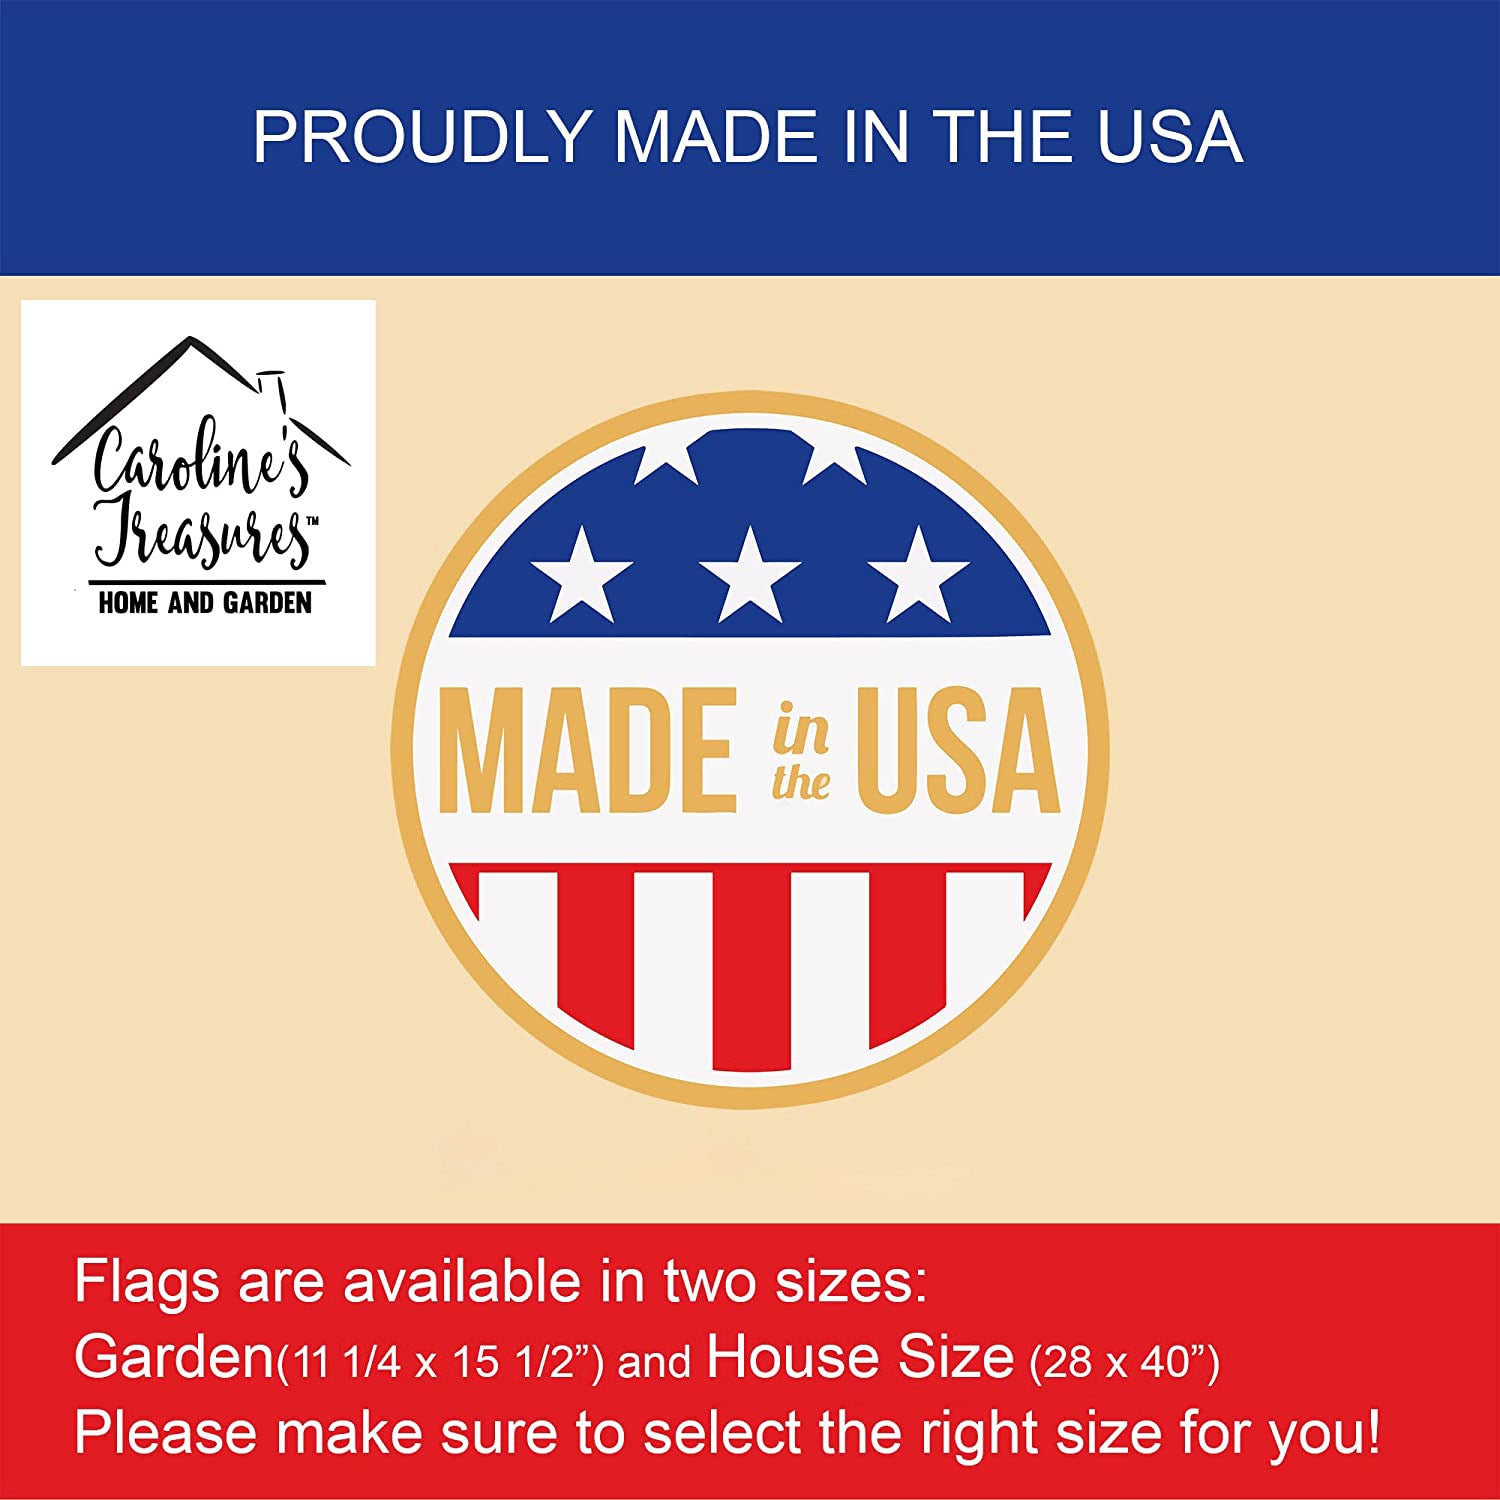 American Foxhound Easter Egg Hunt Garden Flag